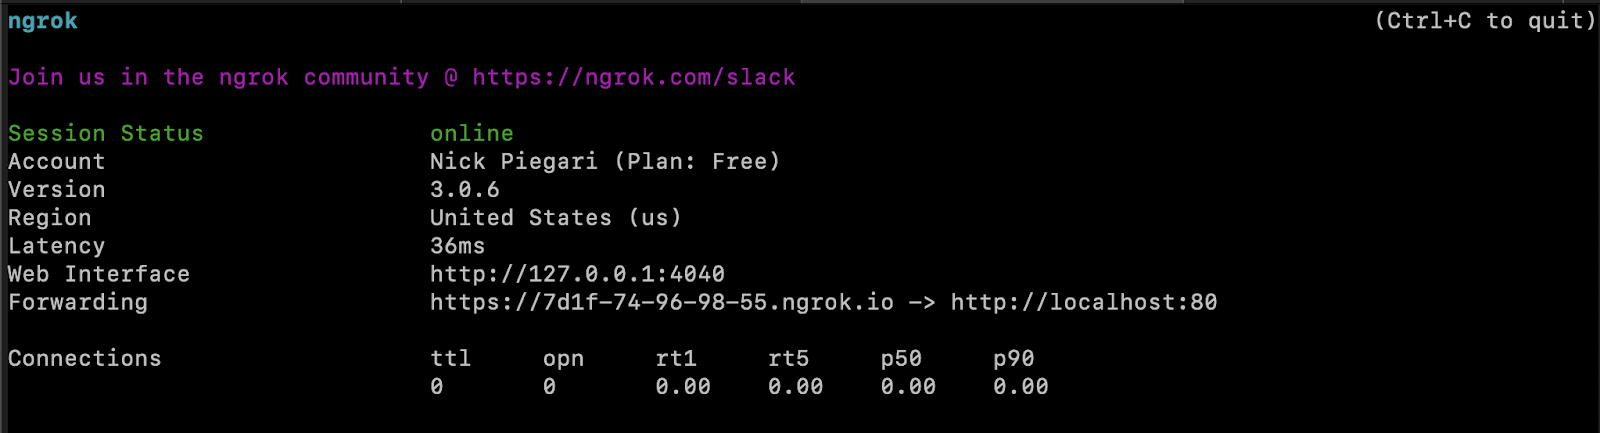 ngrok log statements, showing connection details